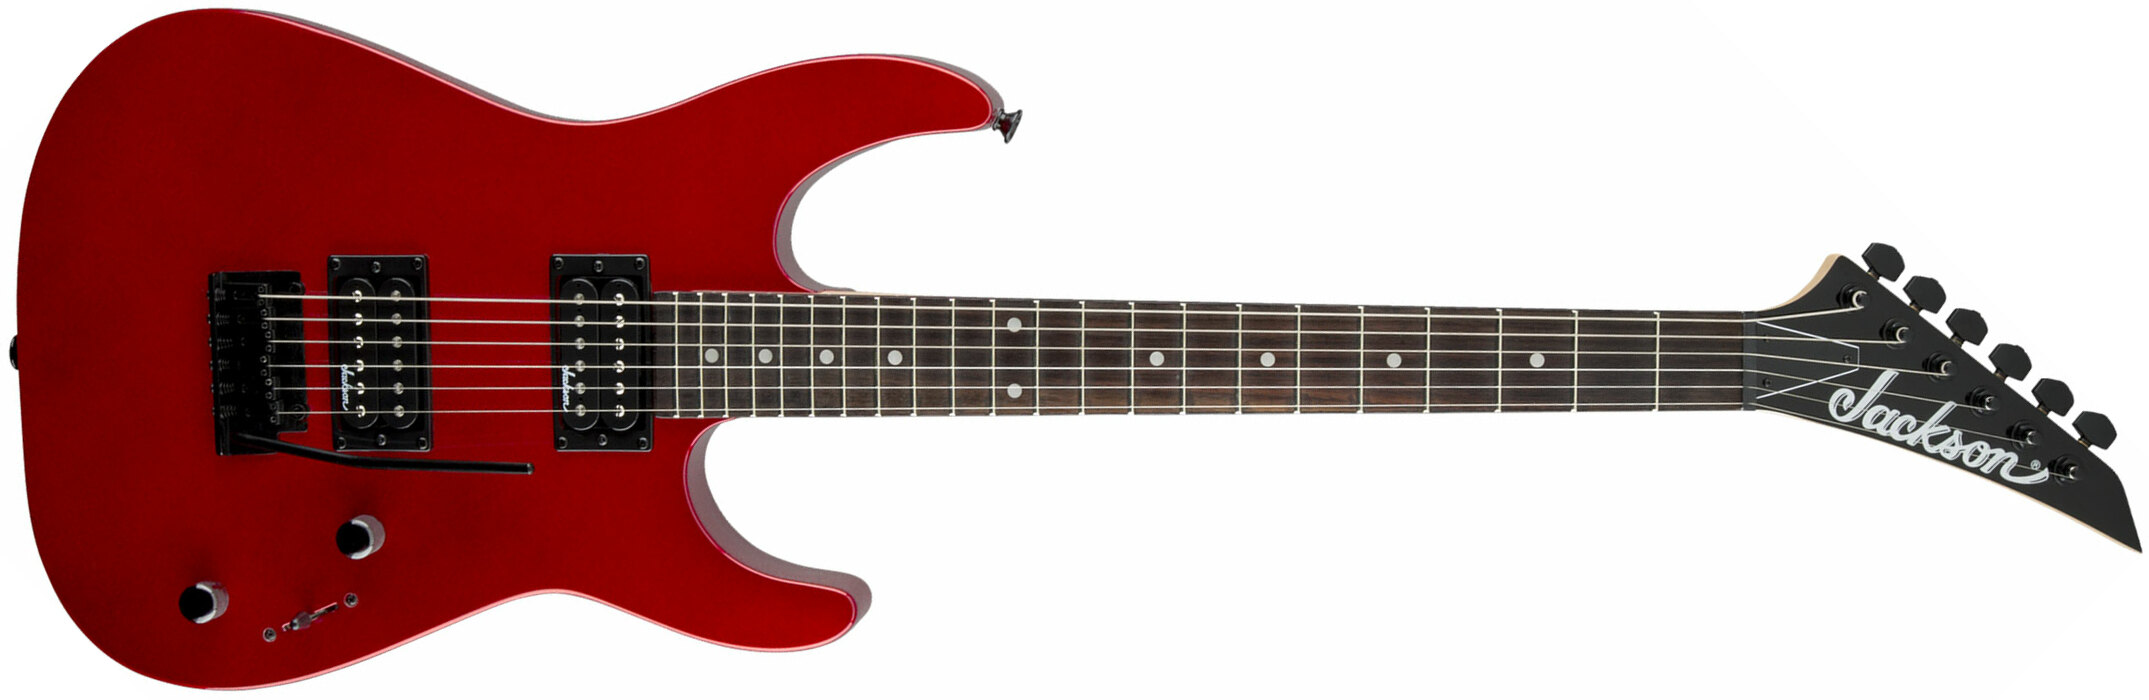 Jackson Dinky Js11 2h Trem Ama - Metallic Red - Str shape electric guitar - Main picture